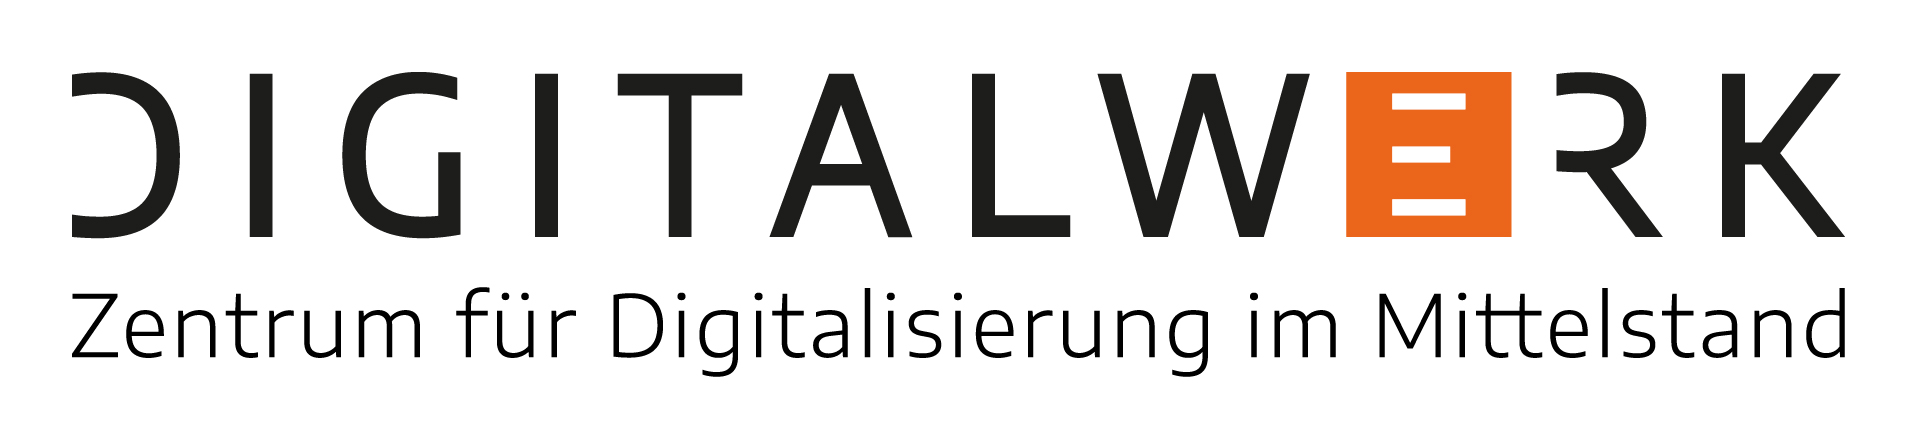 Digitalwerk Logo 2021 2 Zeiler